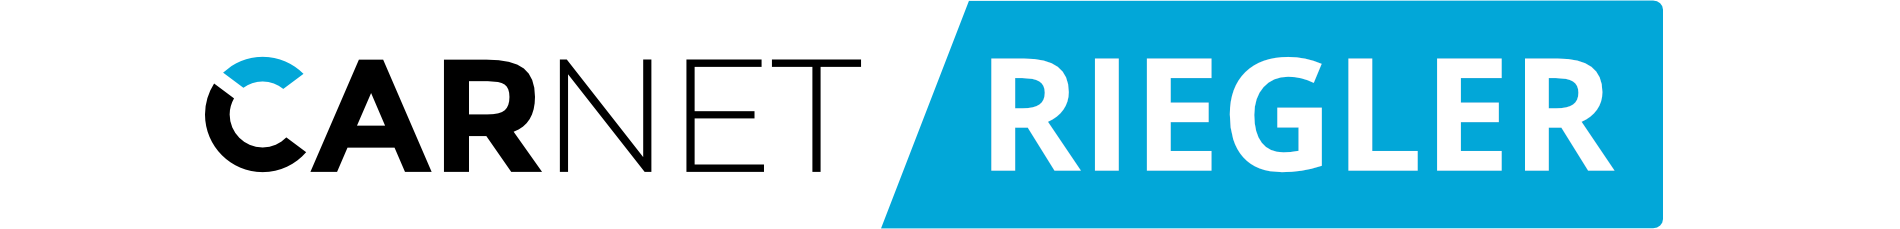 carnet-riegler-logo